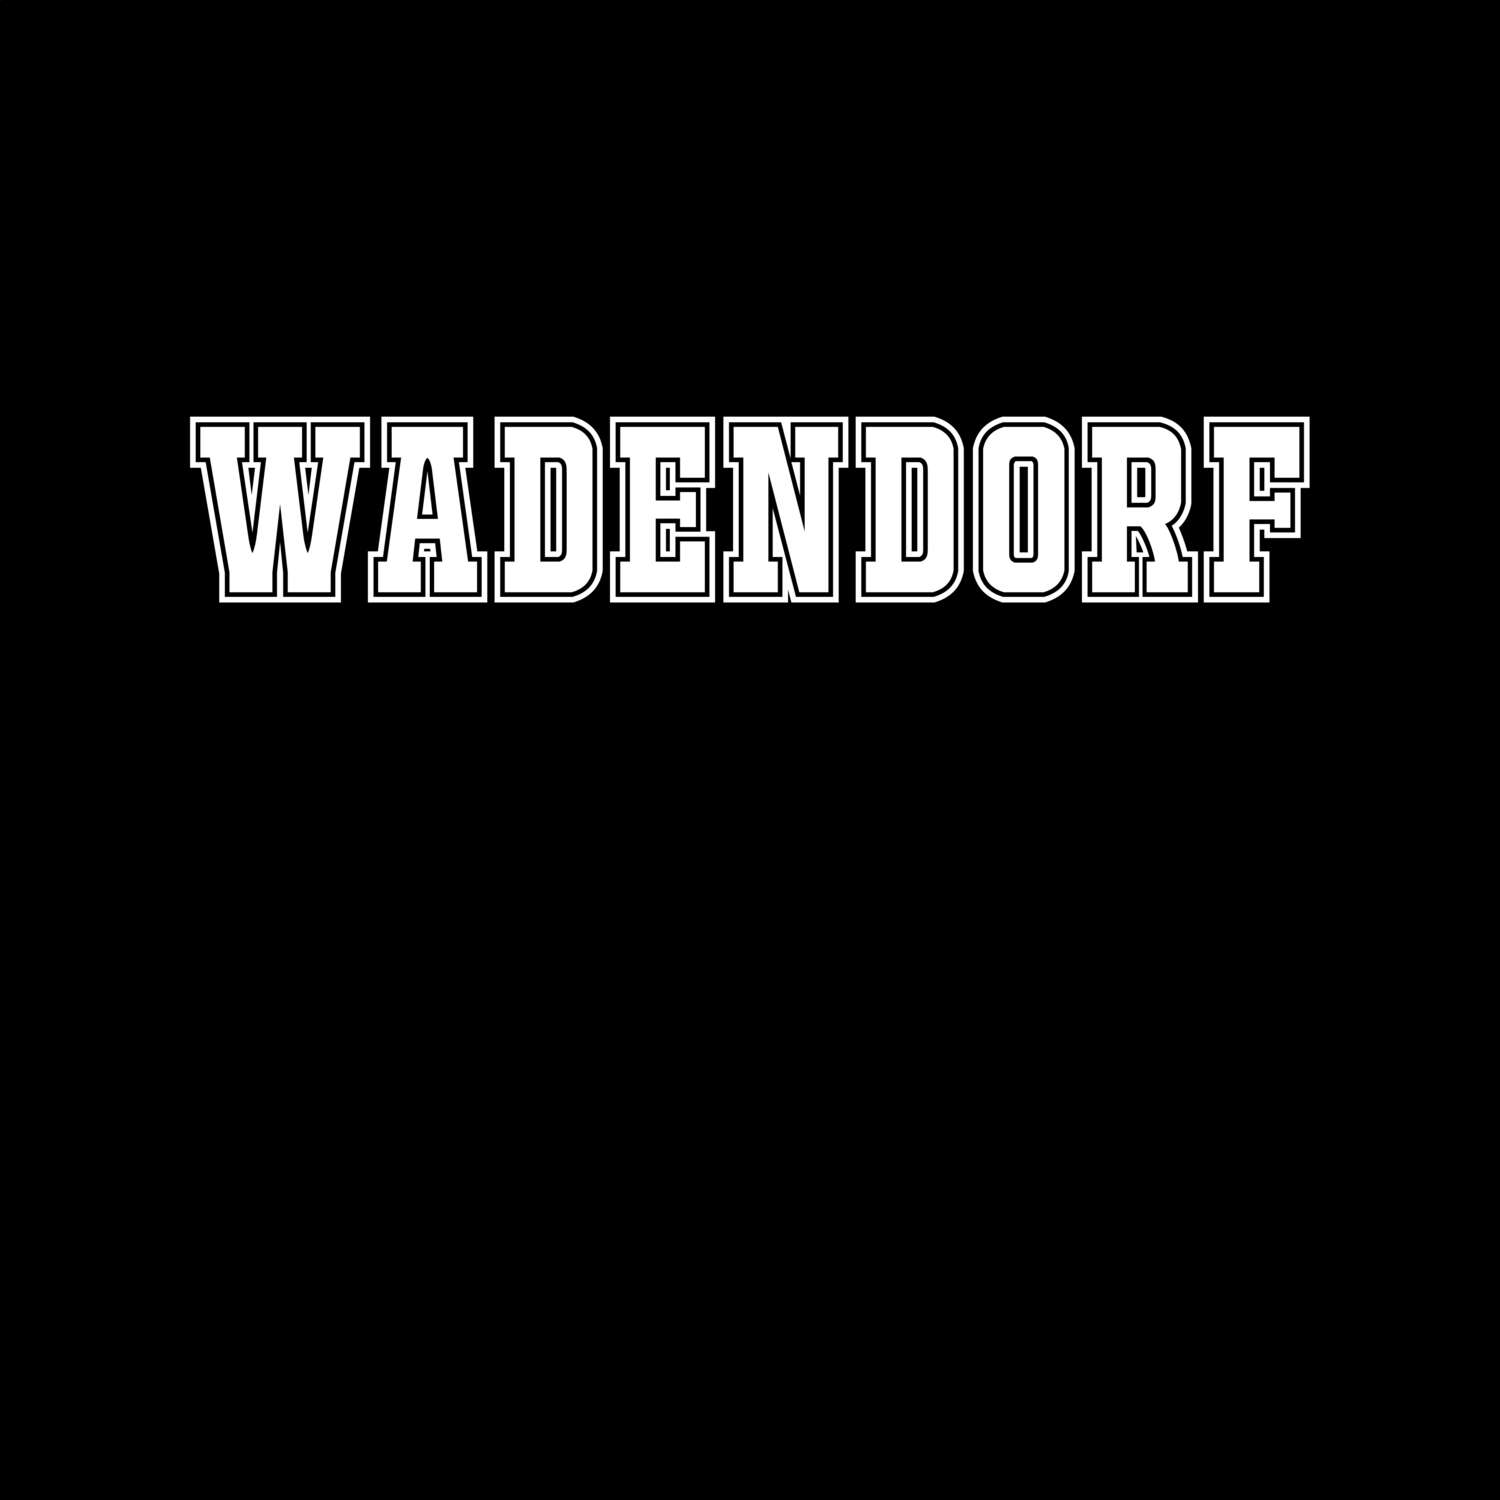 Wadendorf T-Shirt »Classic«